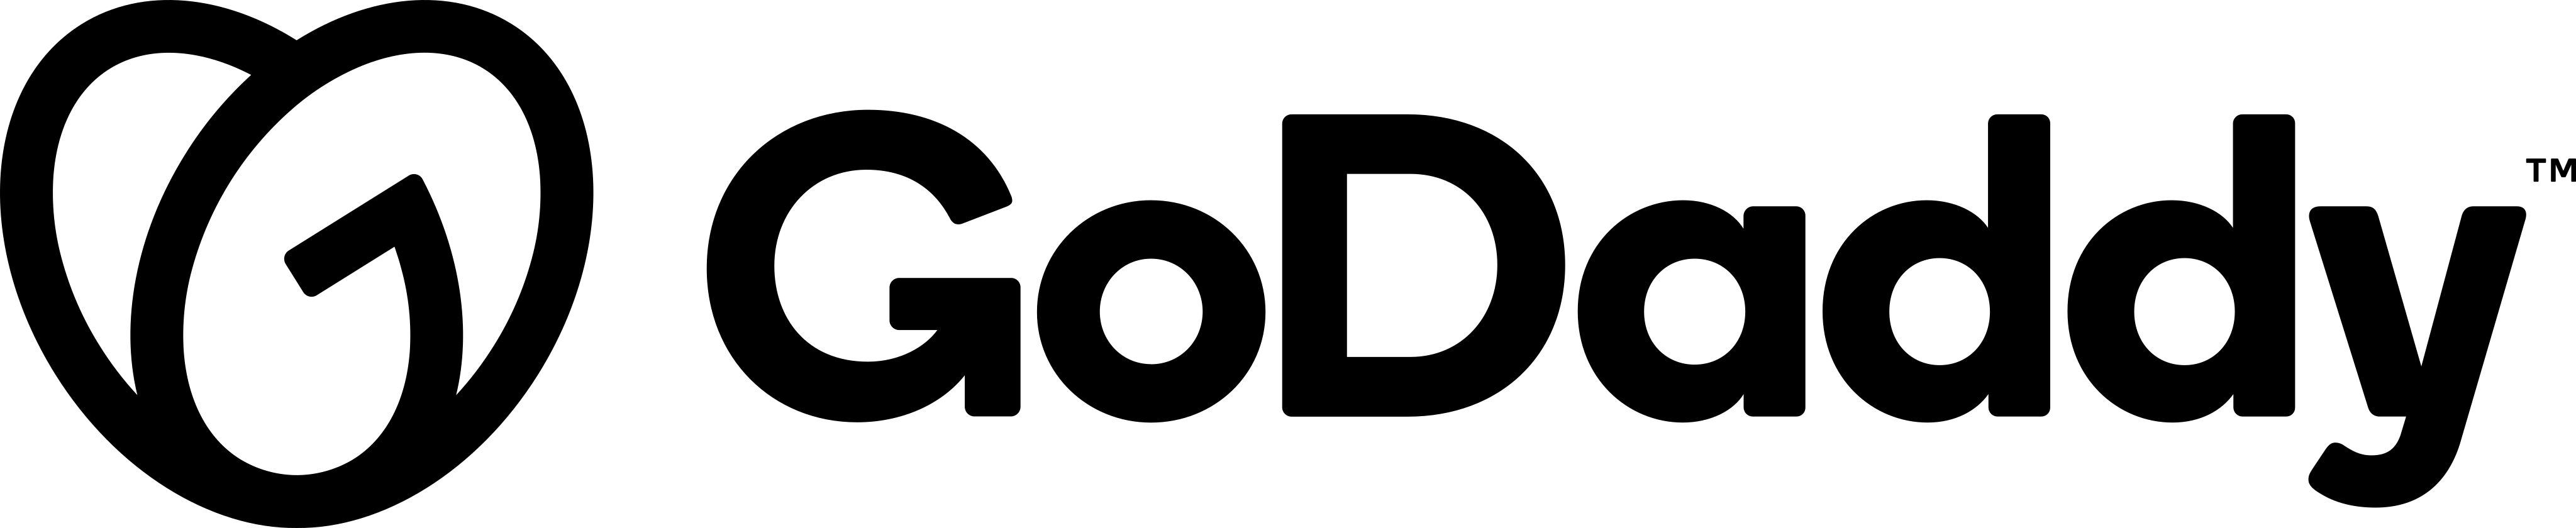 godaddy logo 8